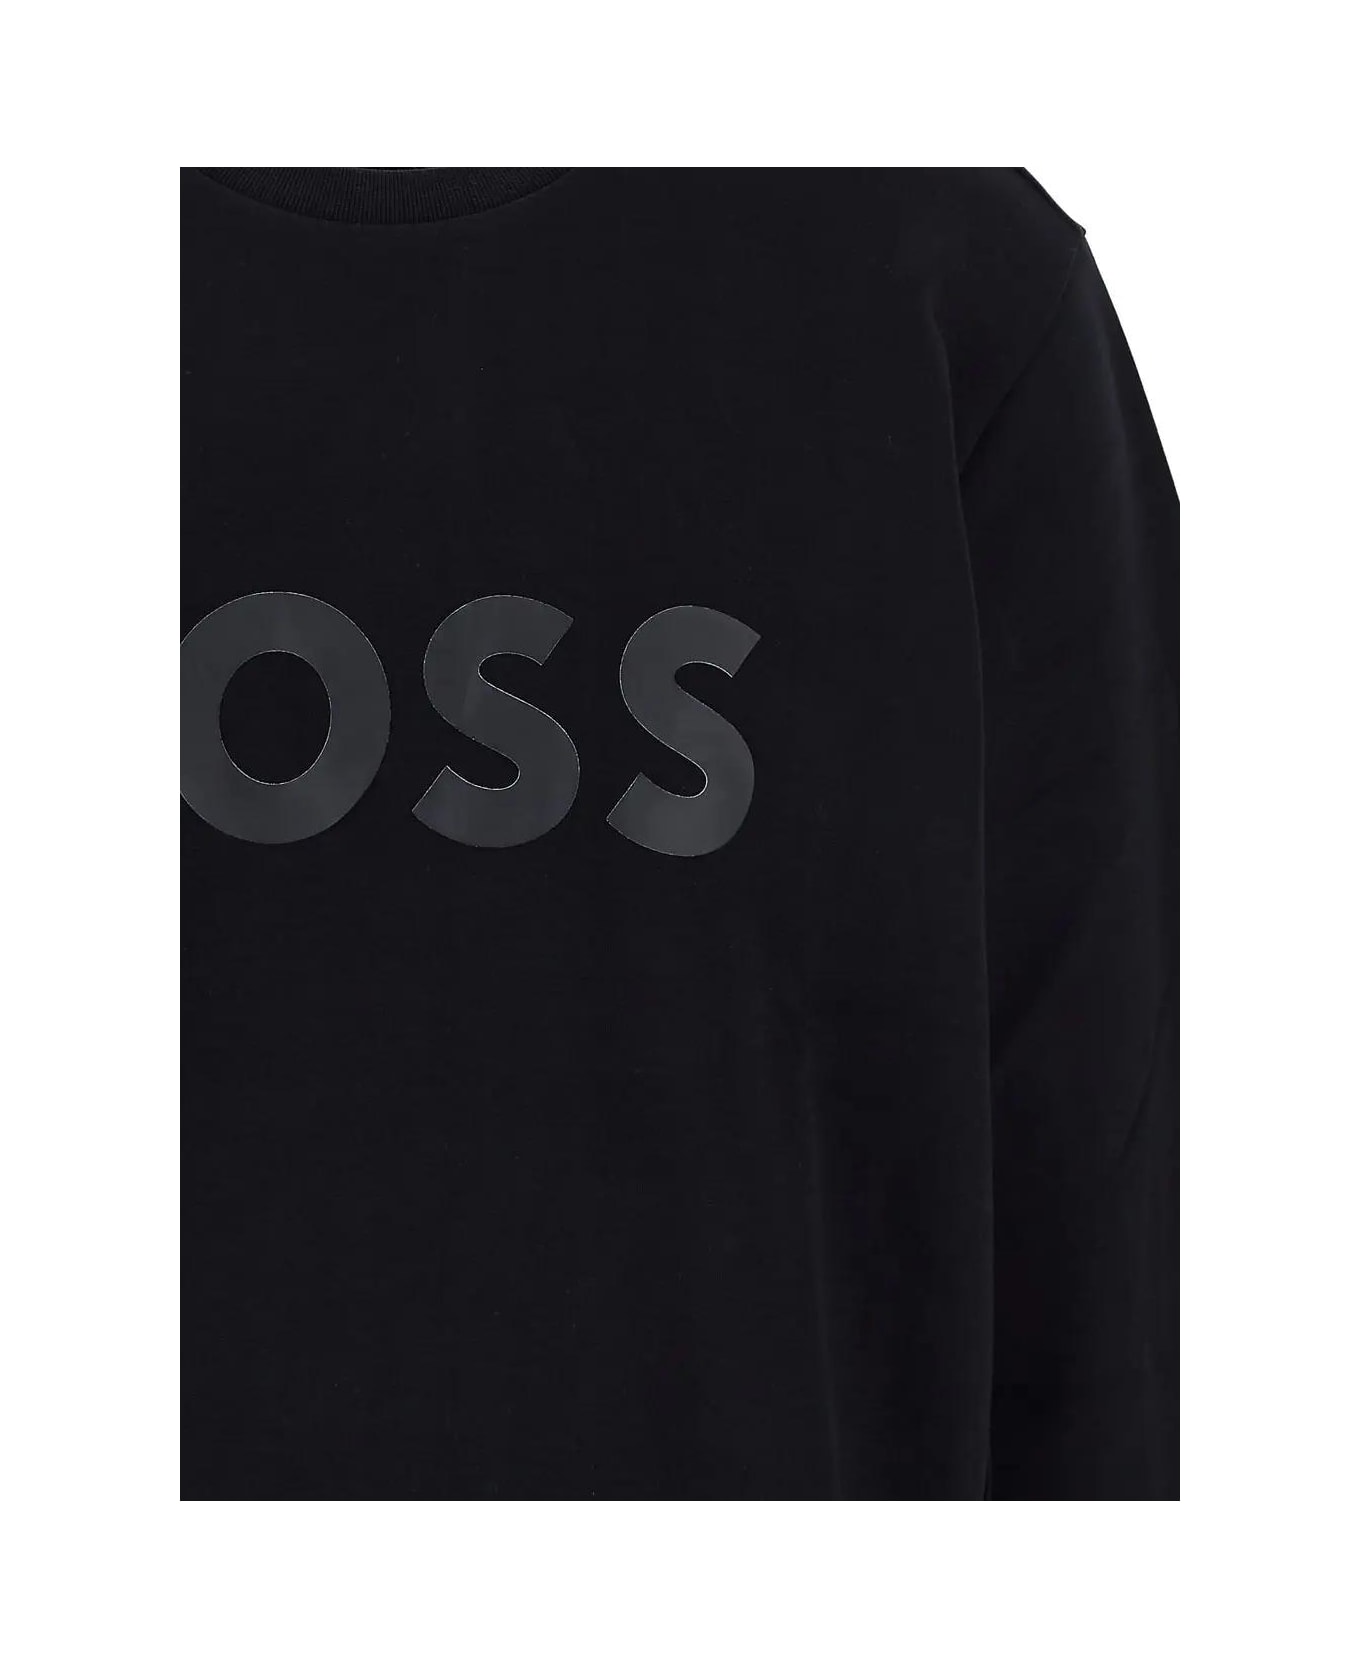 Hugo Boss Cotton Sweatshirt - Black